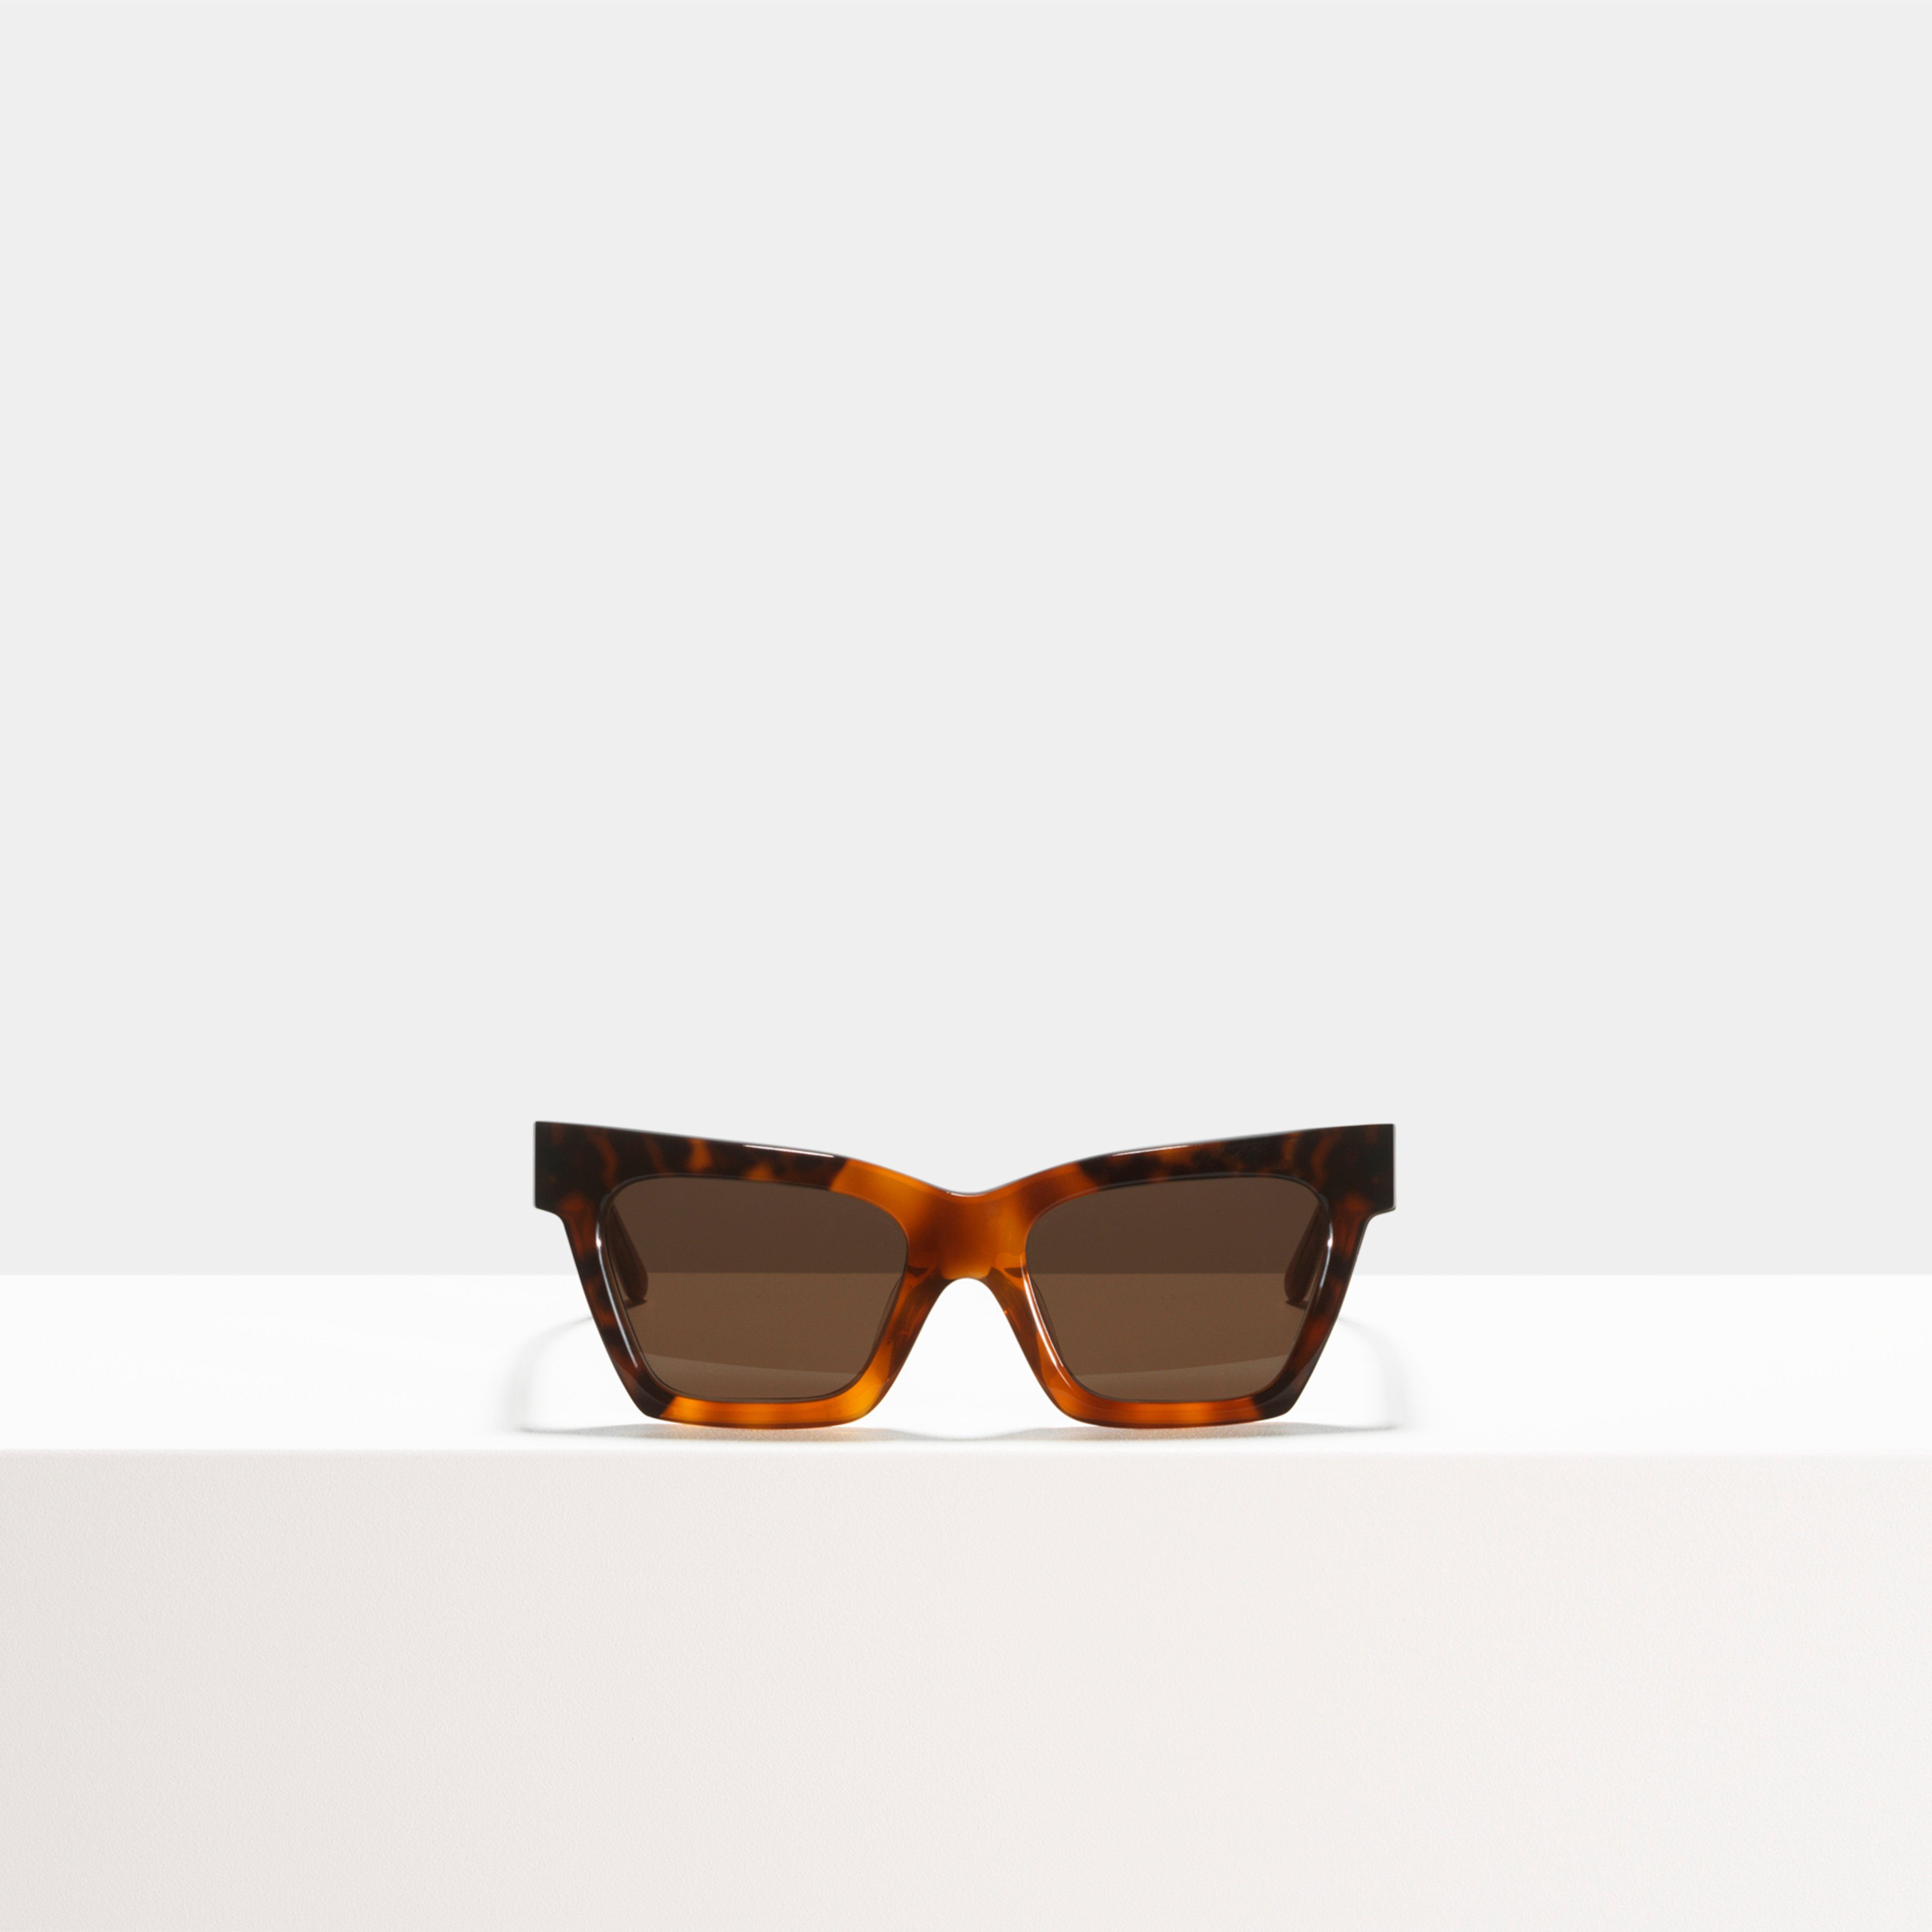 Ace & Tate Gafas de sol | rectangulares Acetato in Marrón, Naranja